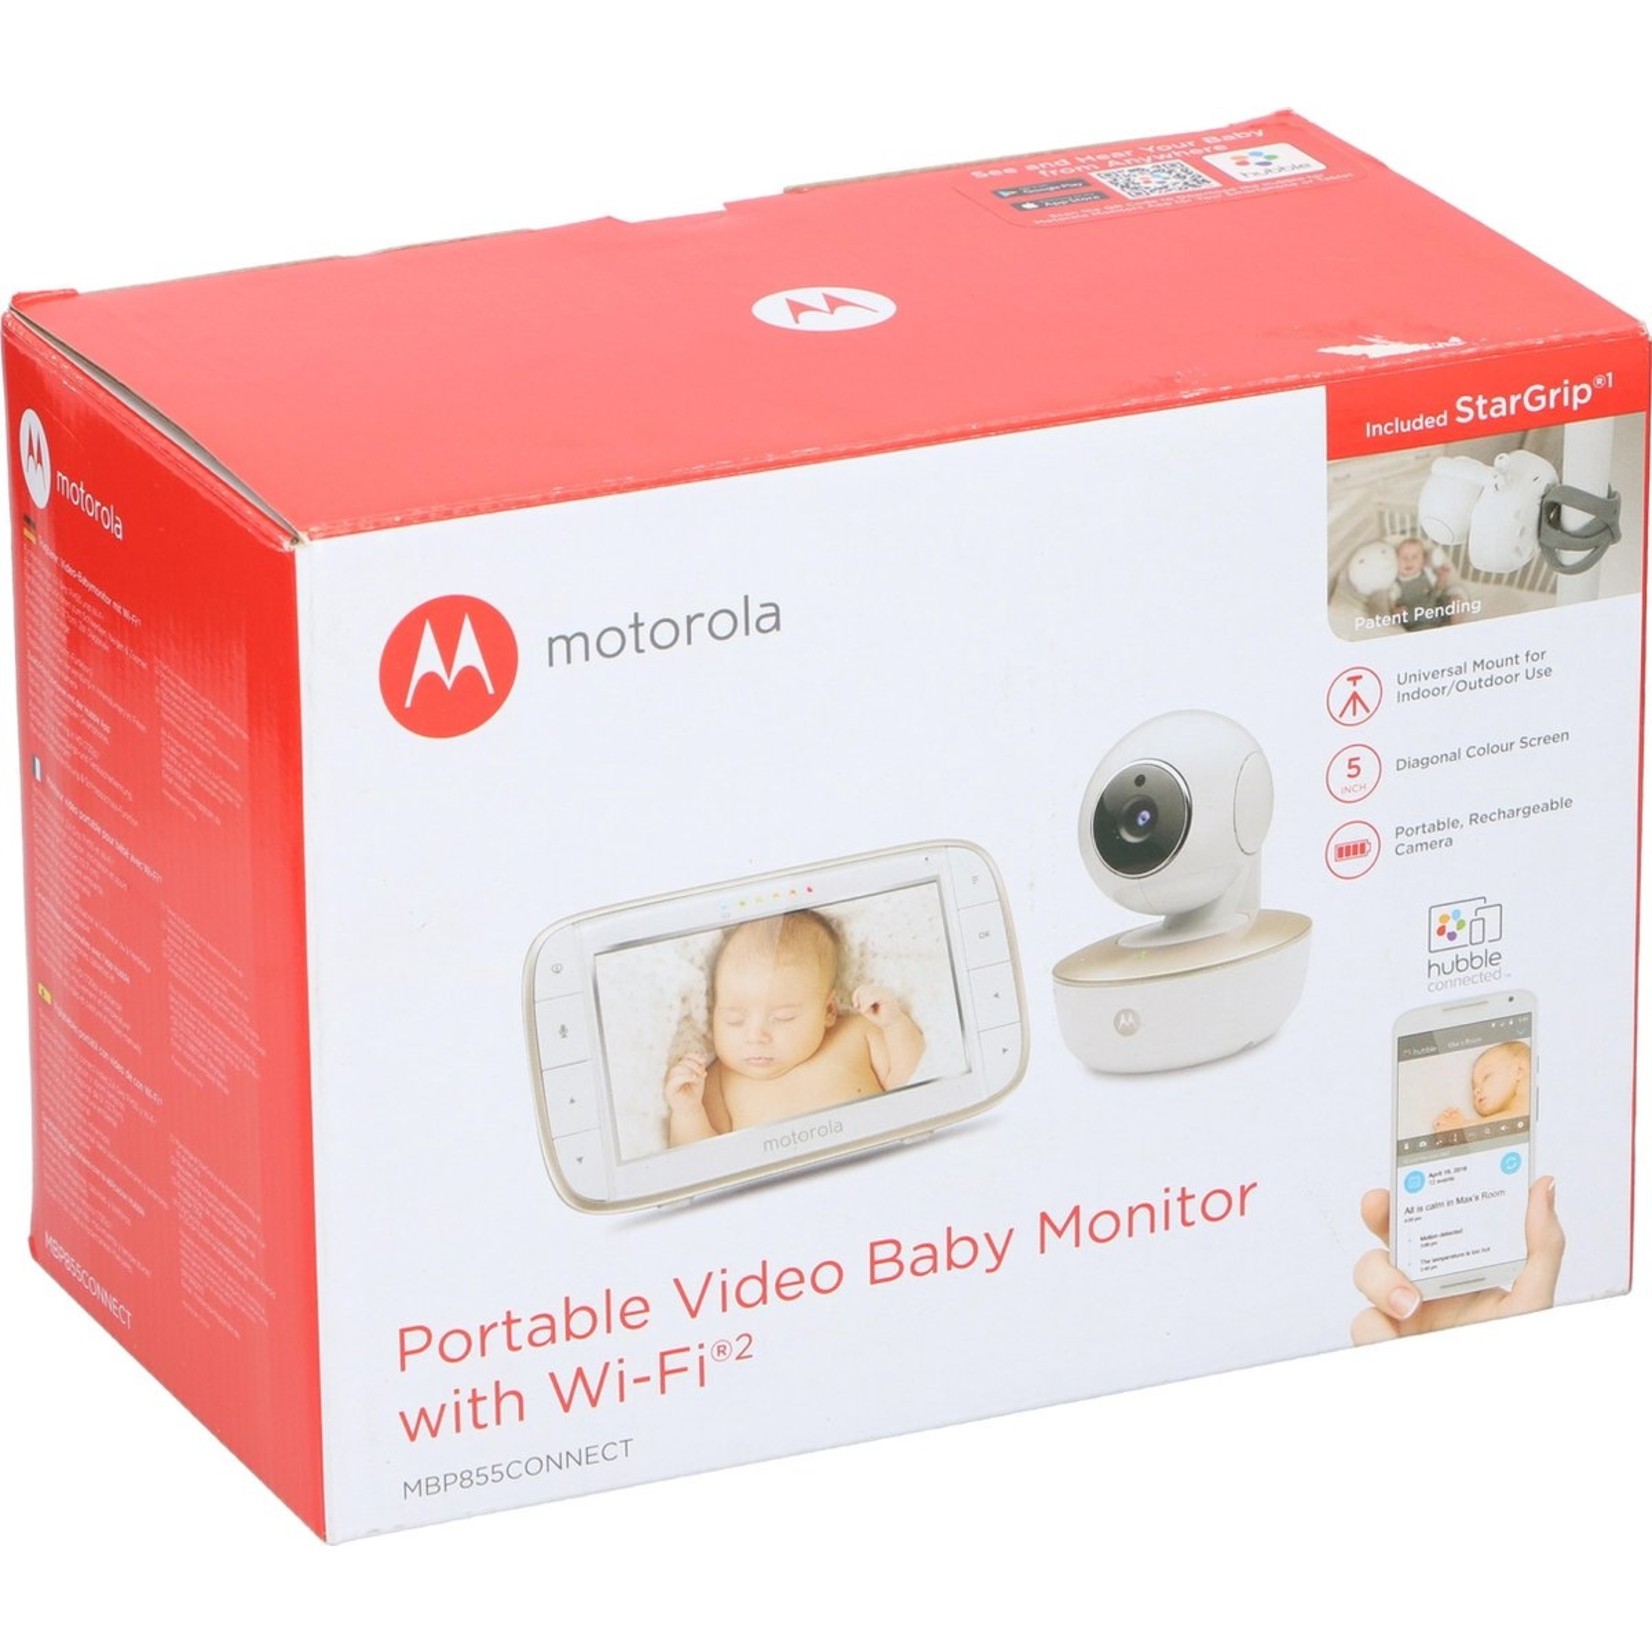 Motorola Motorola Wifi Video Babyfoon met camera & app VM855CONNECT